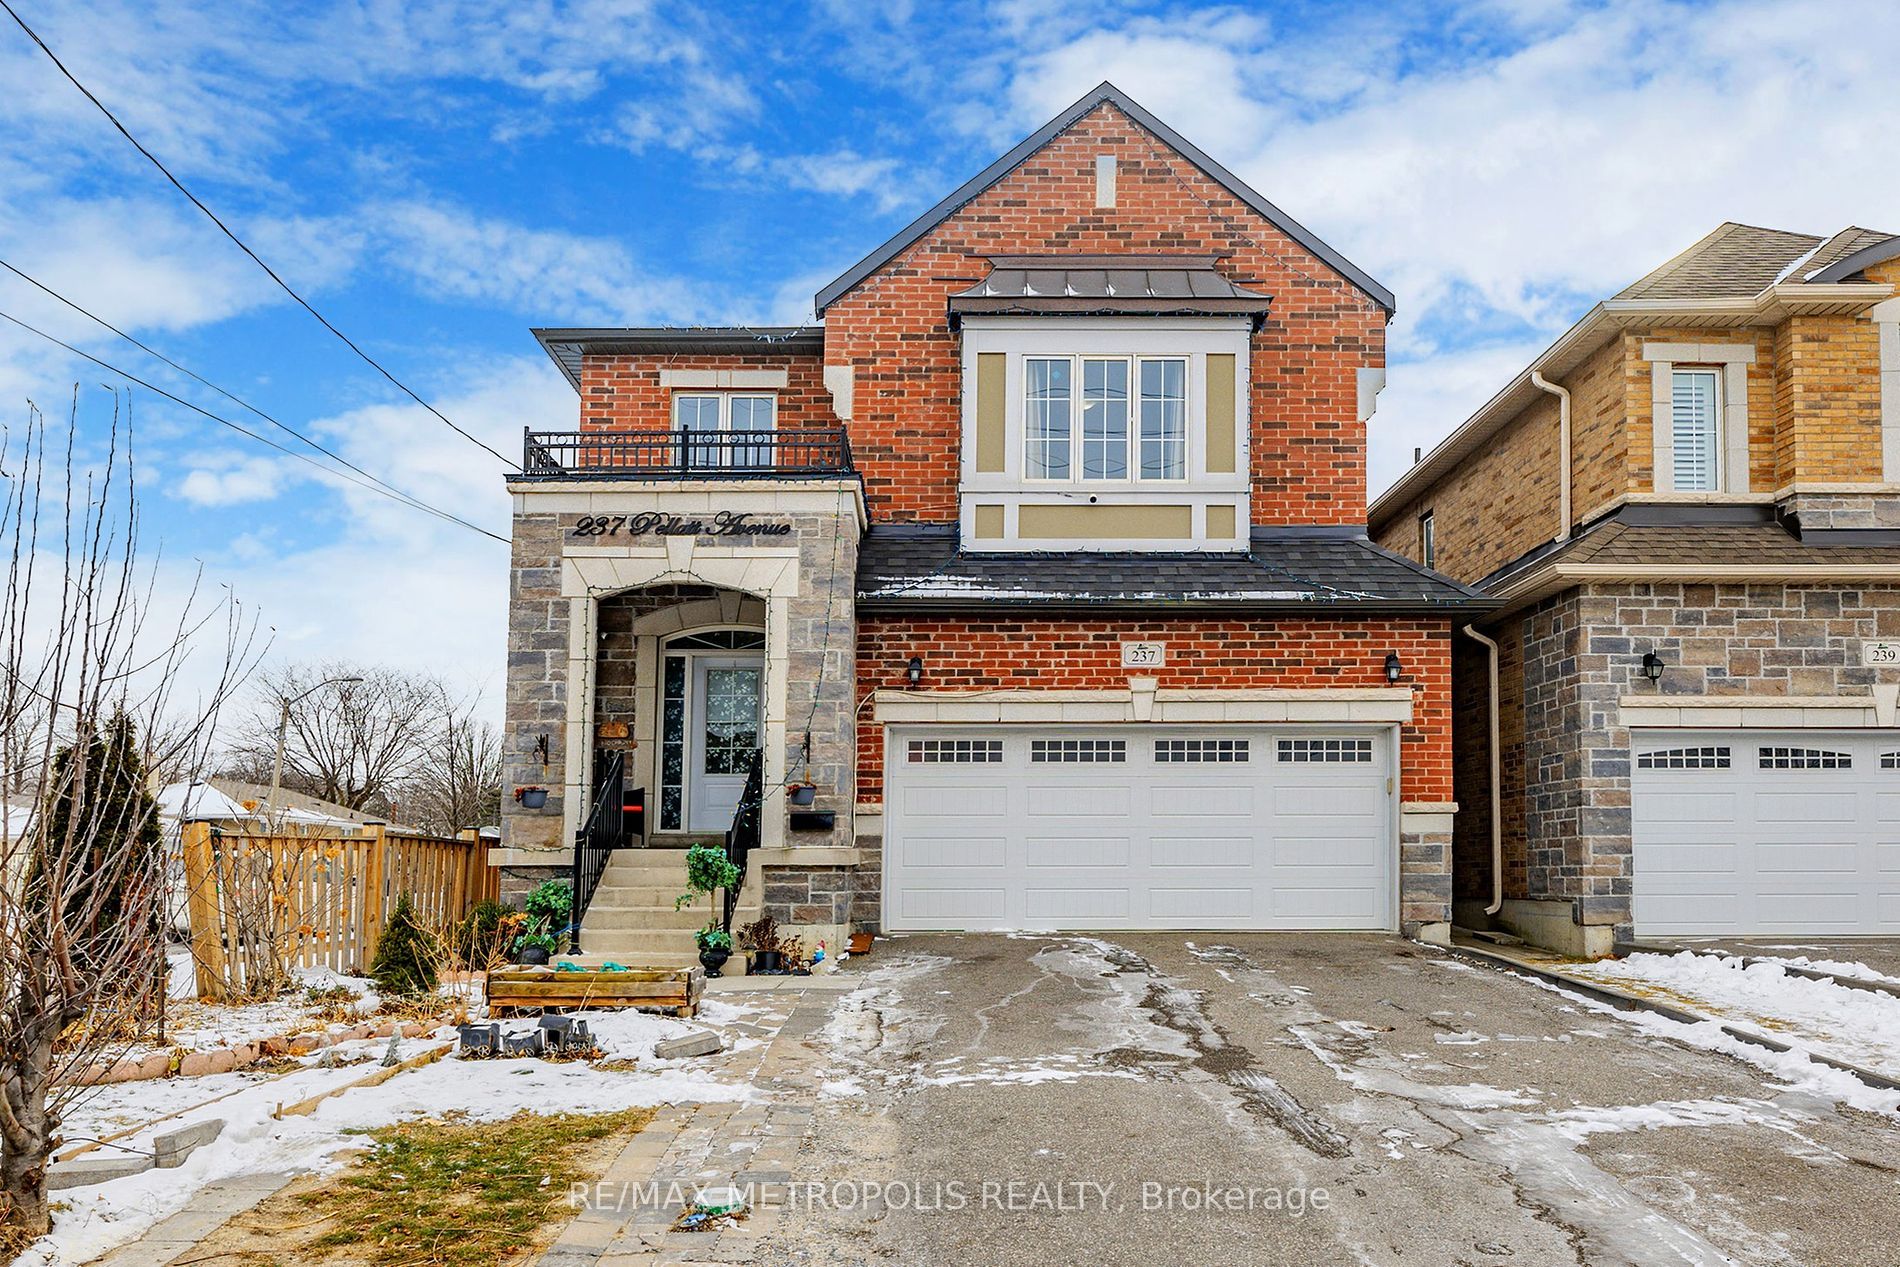 Main Photo: 237 Pellatt Avenue in Toronto: Humberlea-Pelmo Park W4 House (2-Storey) for sale (Toronto W04)  : MLS®# W8055540